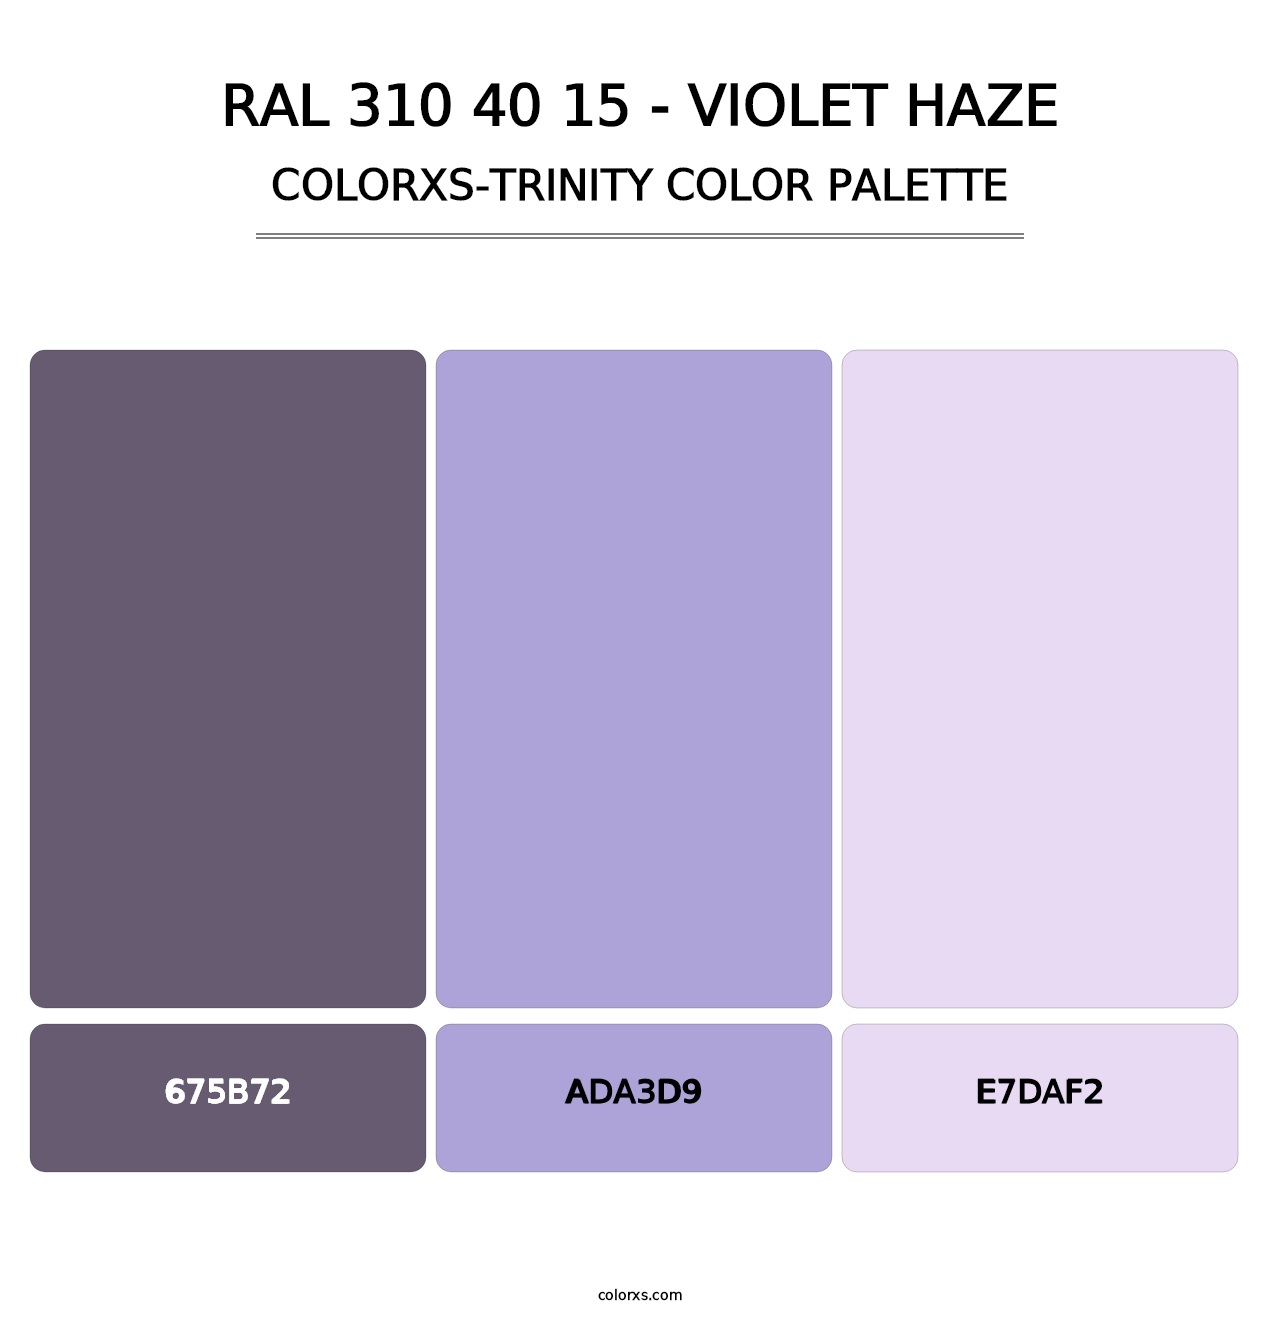 RAL 310 40 15 - Violet Haze - Colorxs Trinity Palette